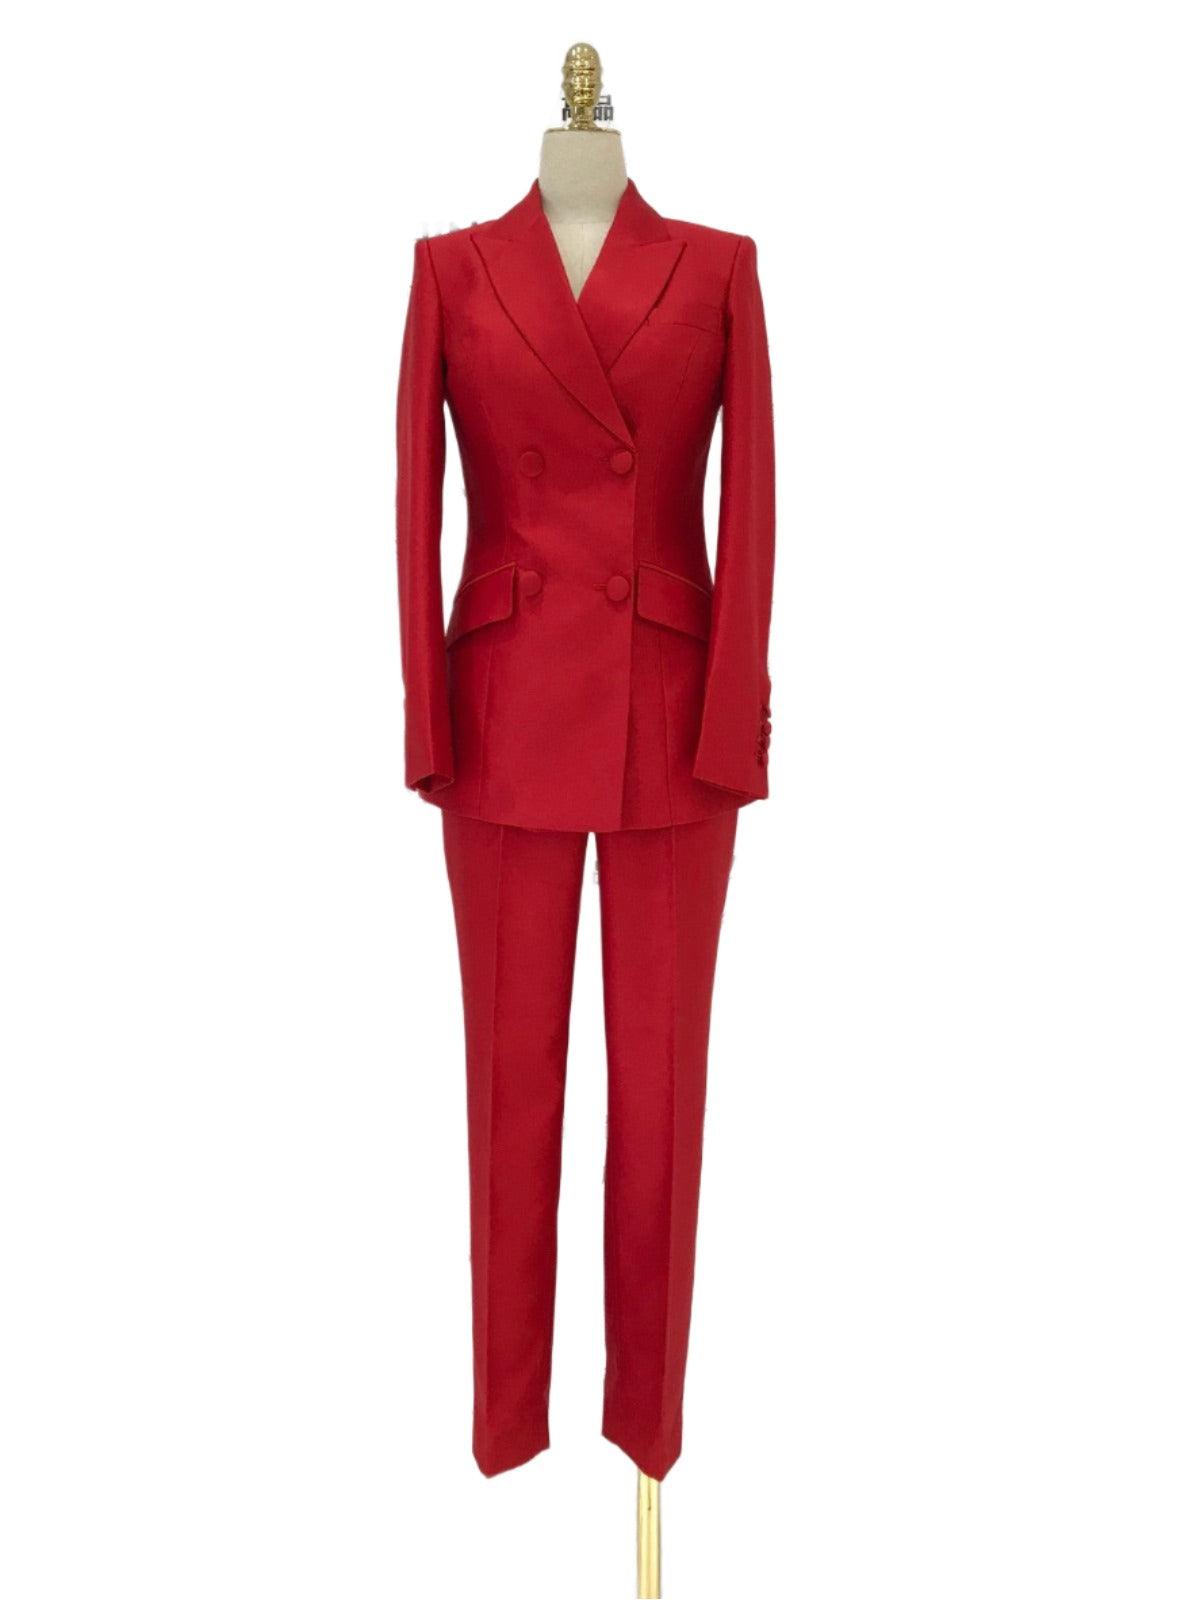 Red 2-Piece Double-Breasted Suit - Women Pant Suit - Pantsuit - Guocali